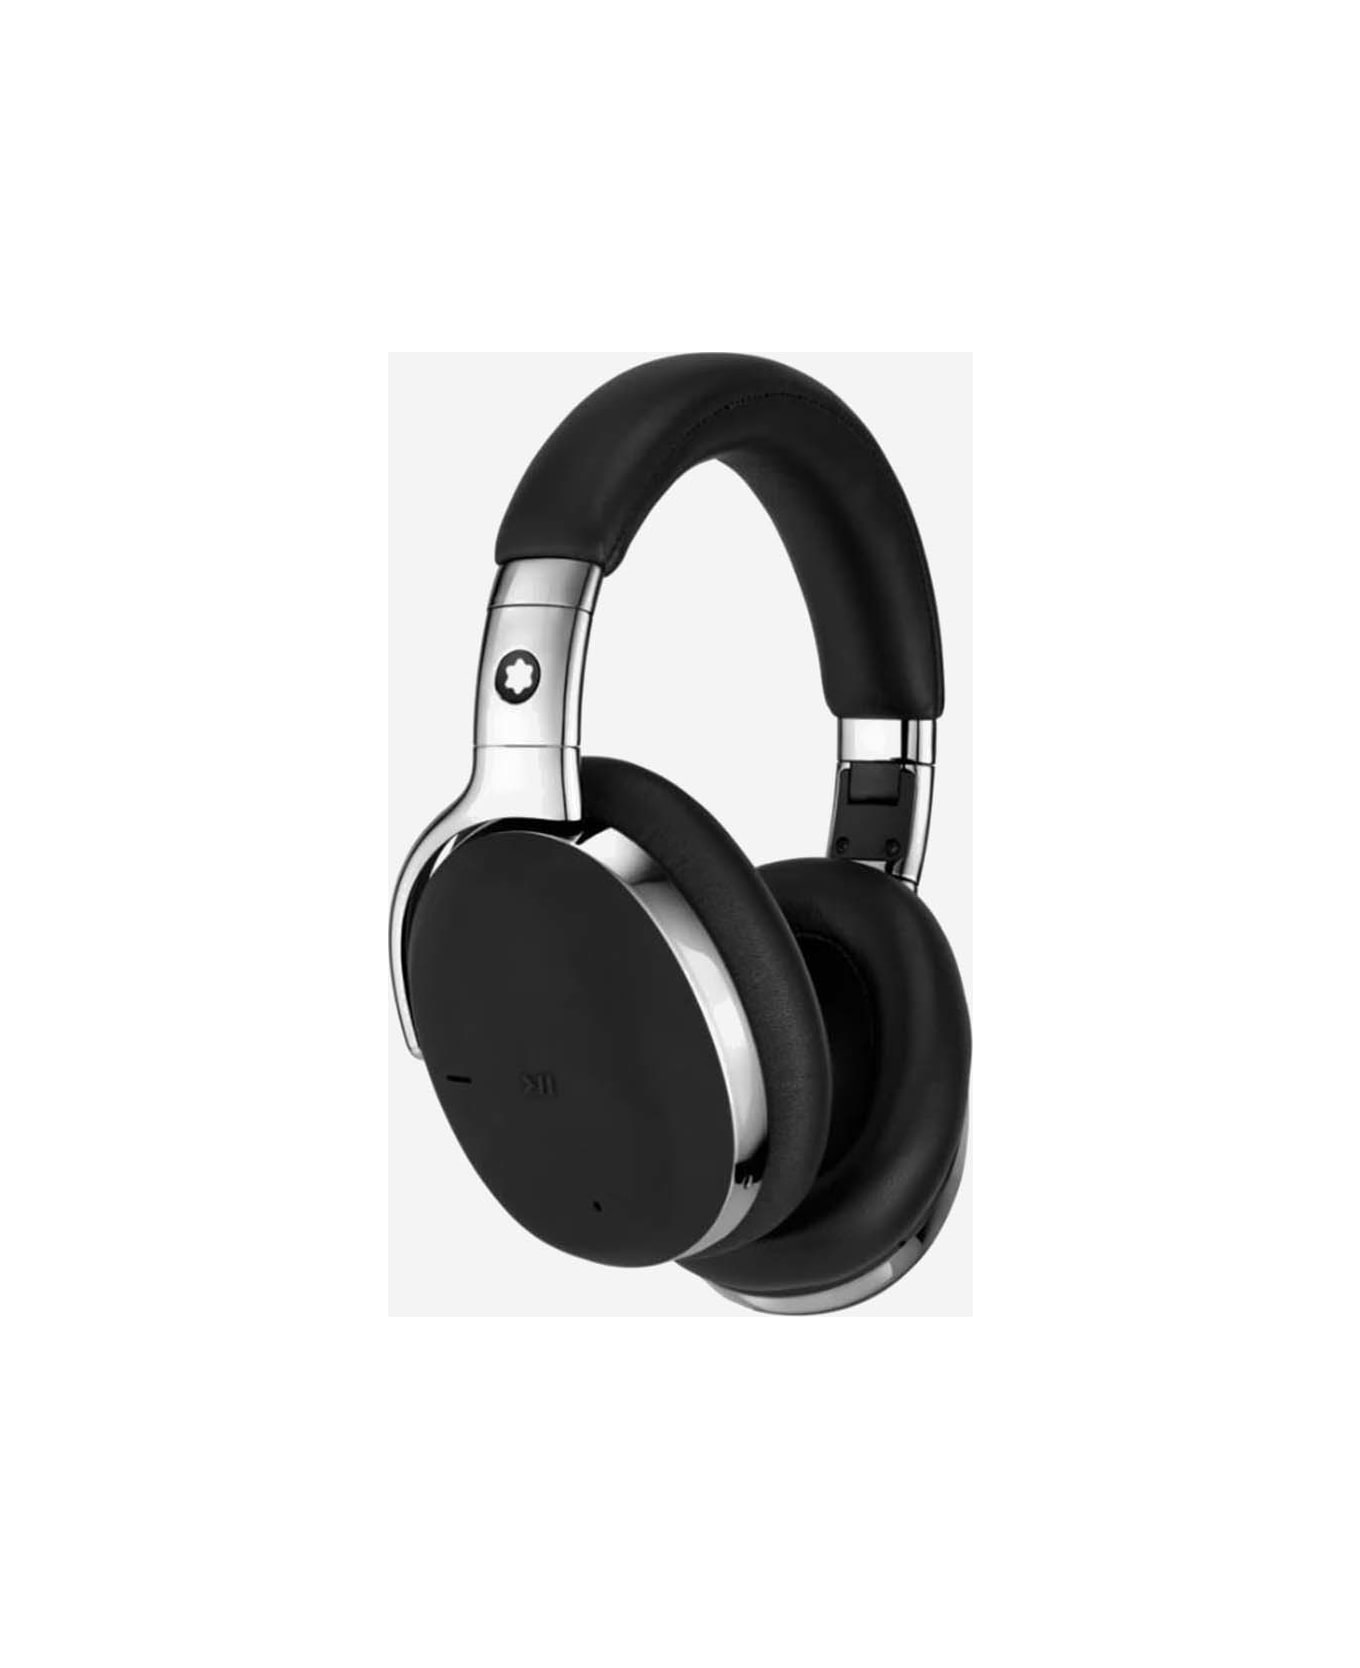 Montblanc Mb 01 Headphones - Black